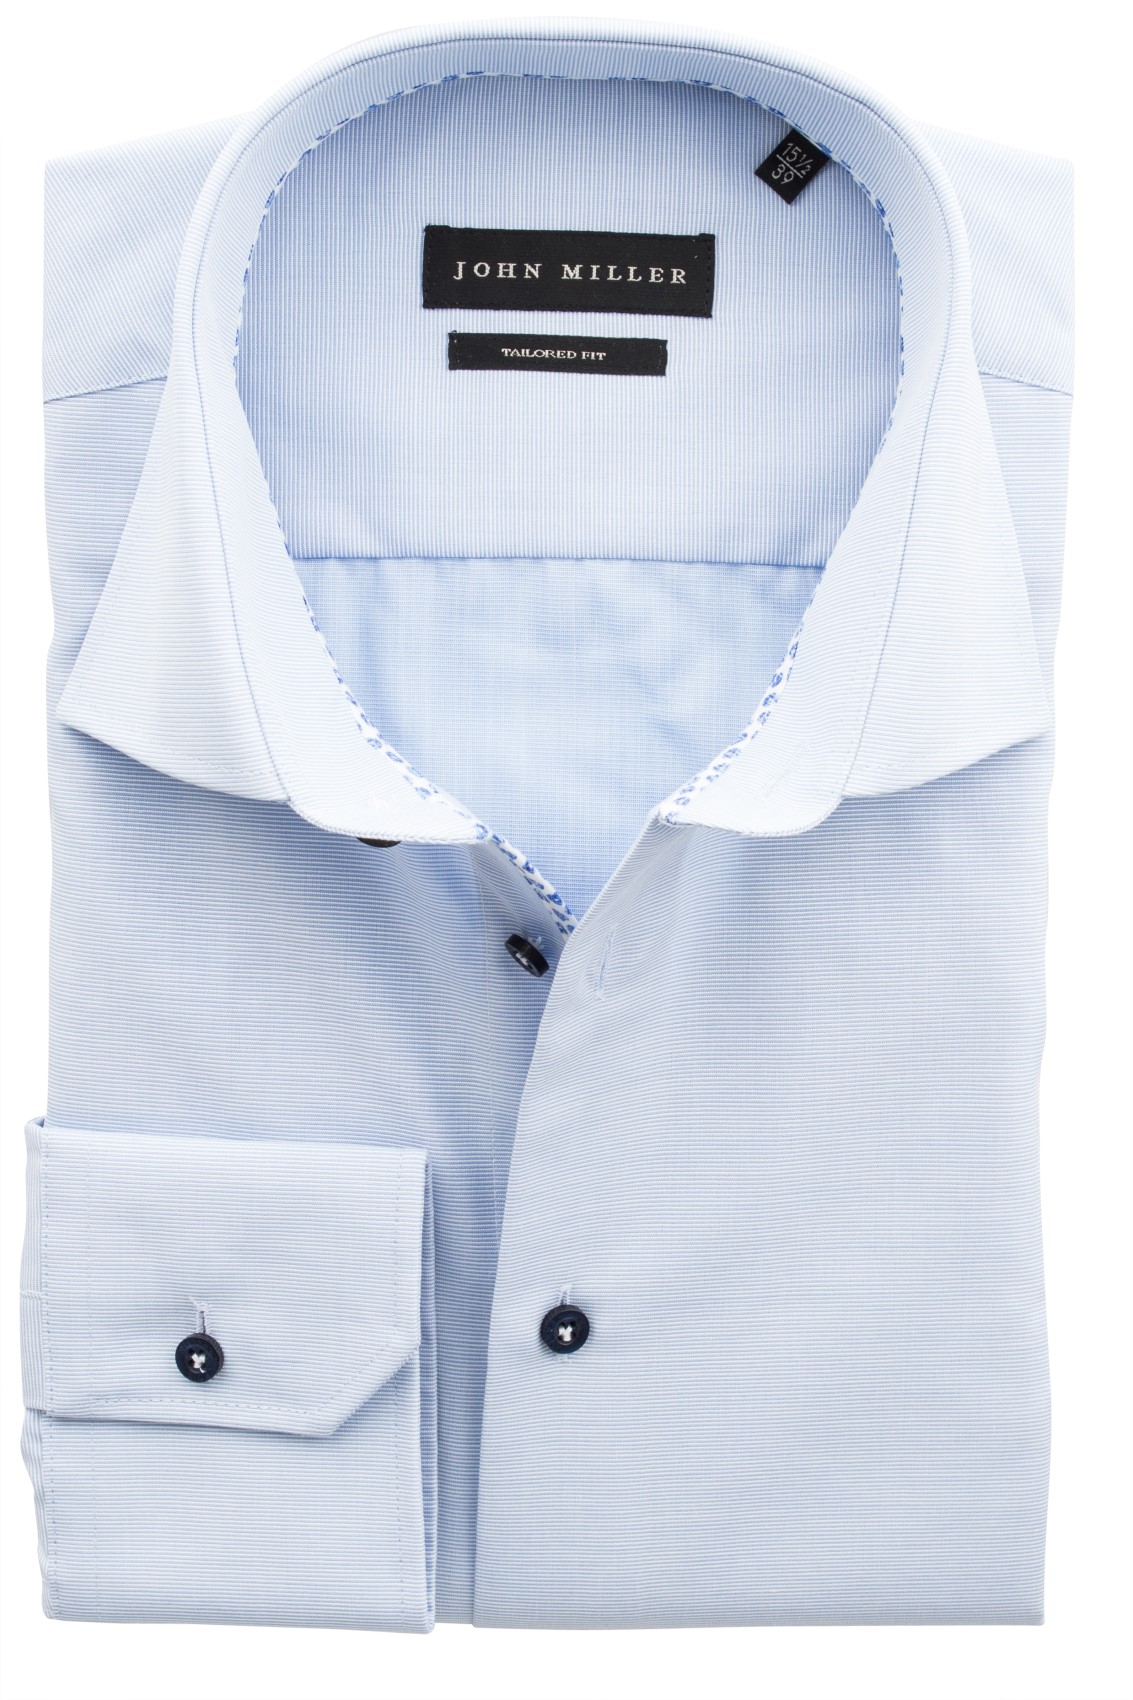 John Miller overhemd mouwlengte 7 Tailored Fit slim fit lichtblauw effen katoen